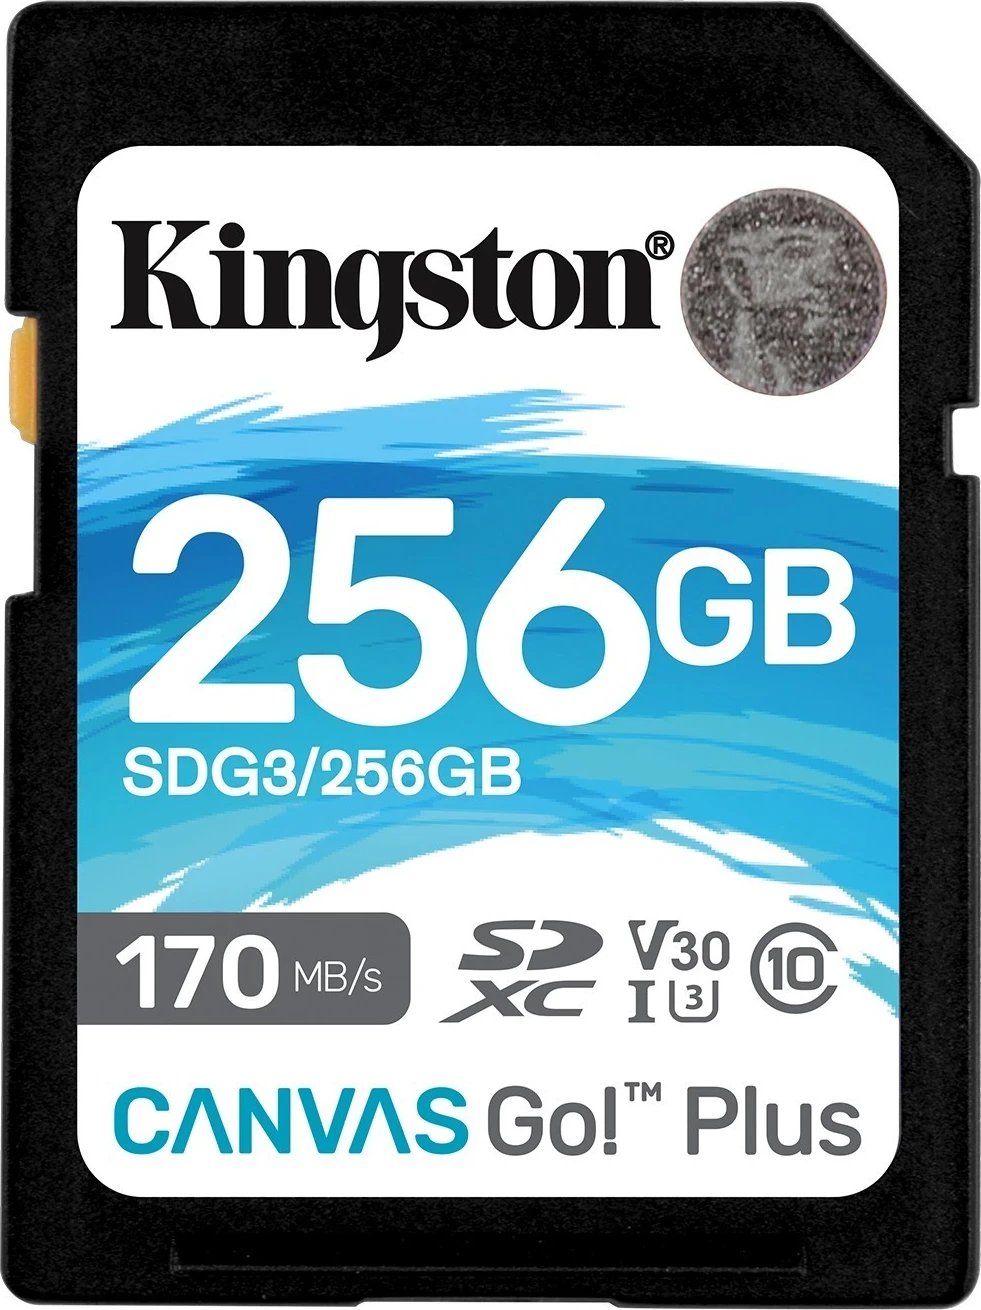 Kartë memorie Kingston, 256GB